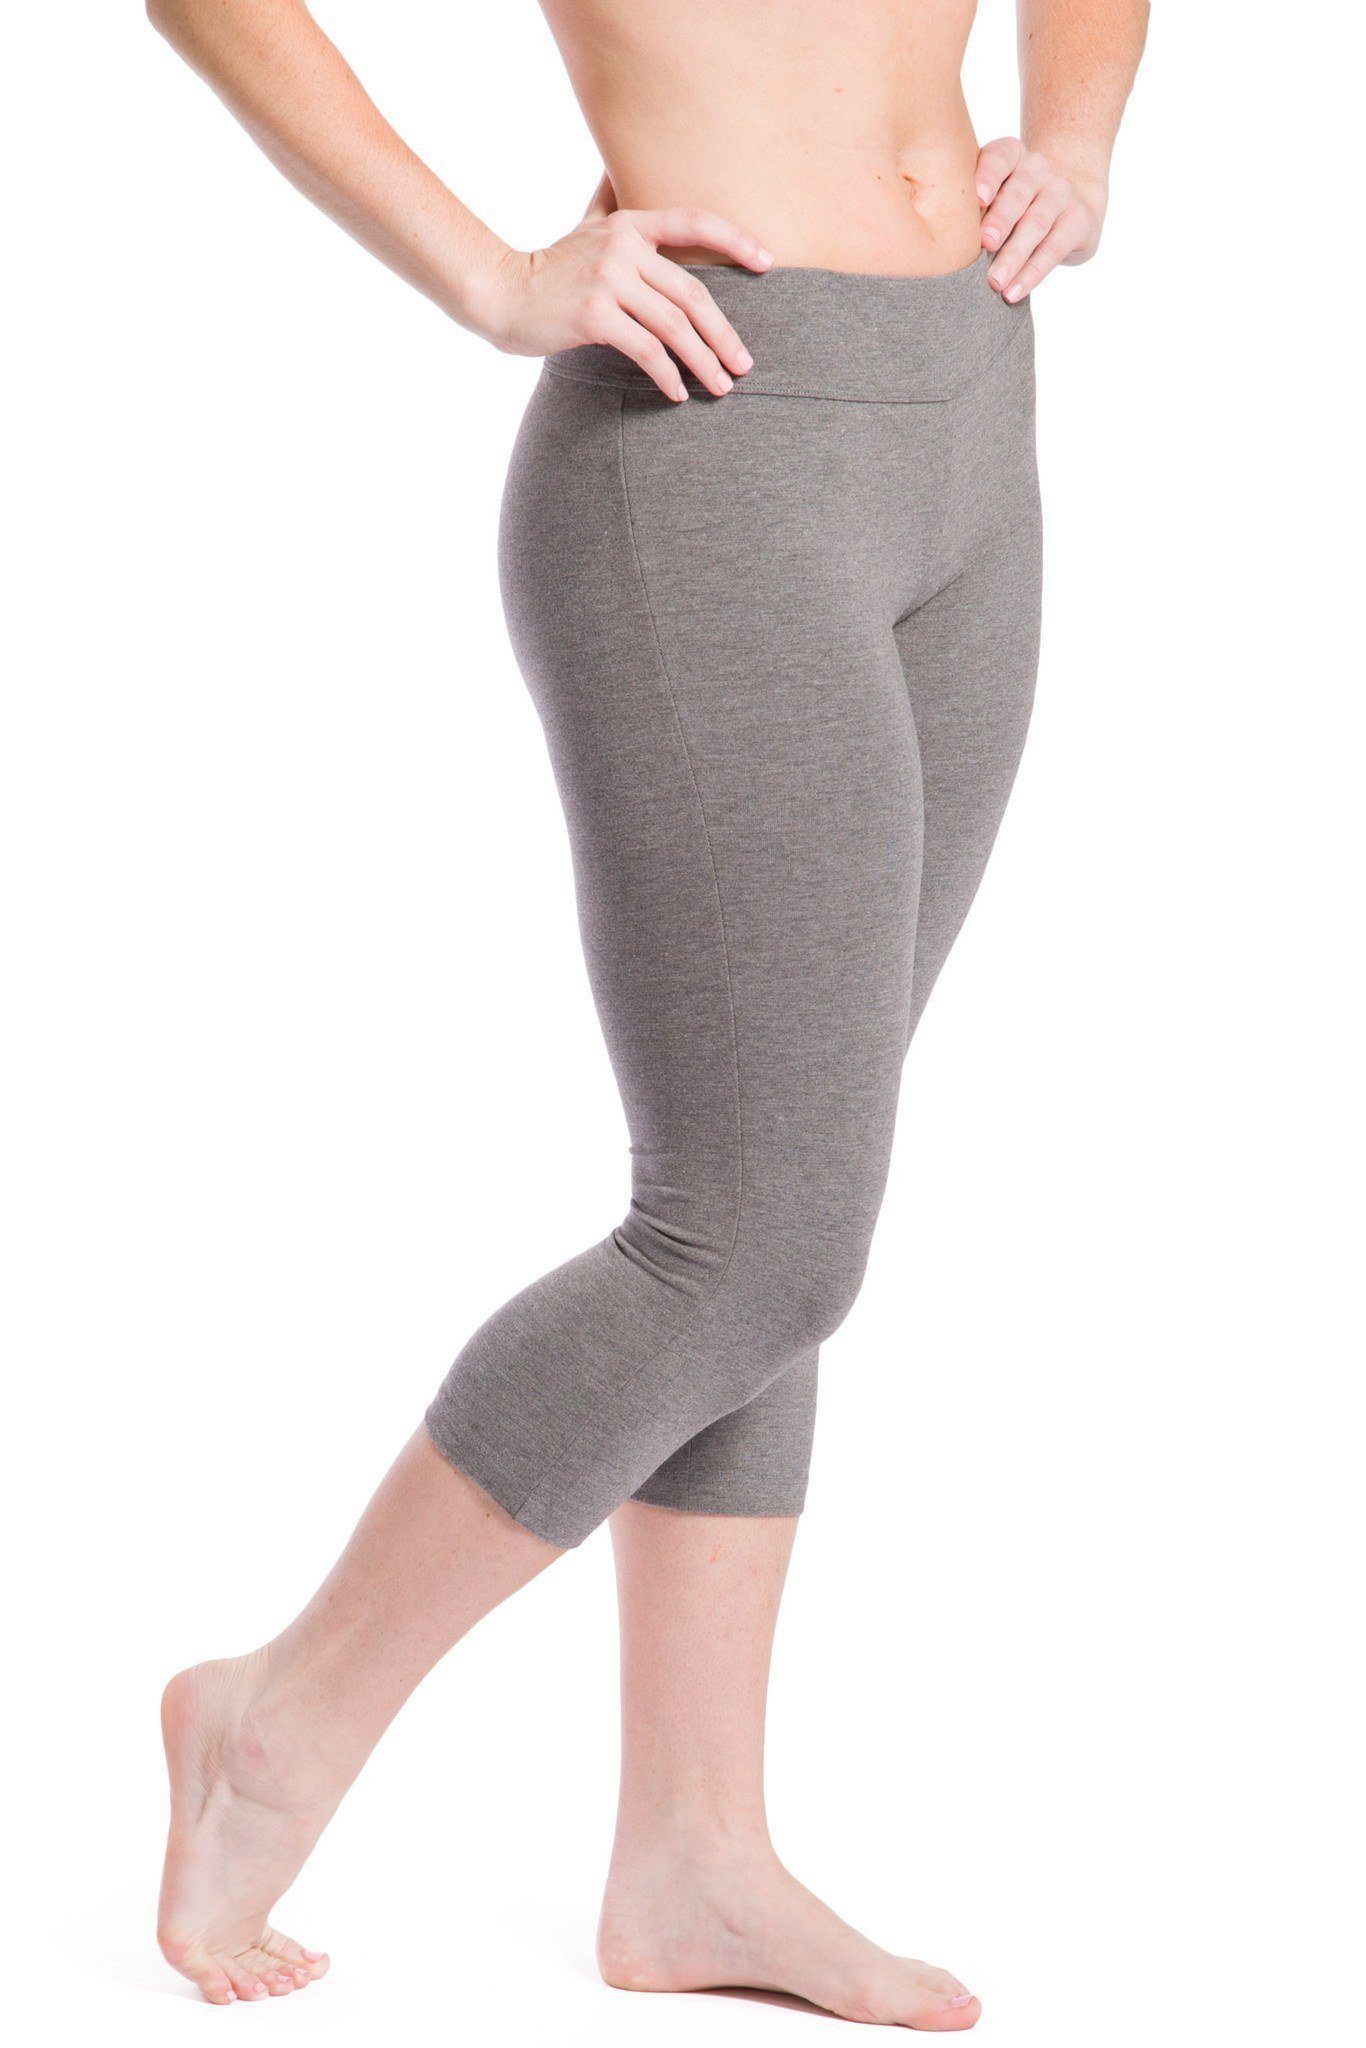 Yoga Pant High Waist Fitted Capri Length Legging – The Yoga Line